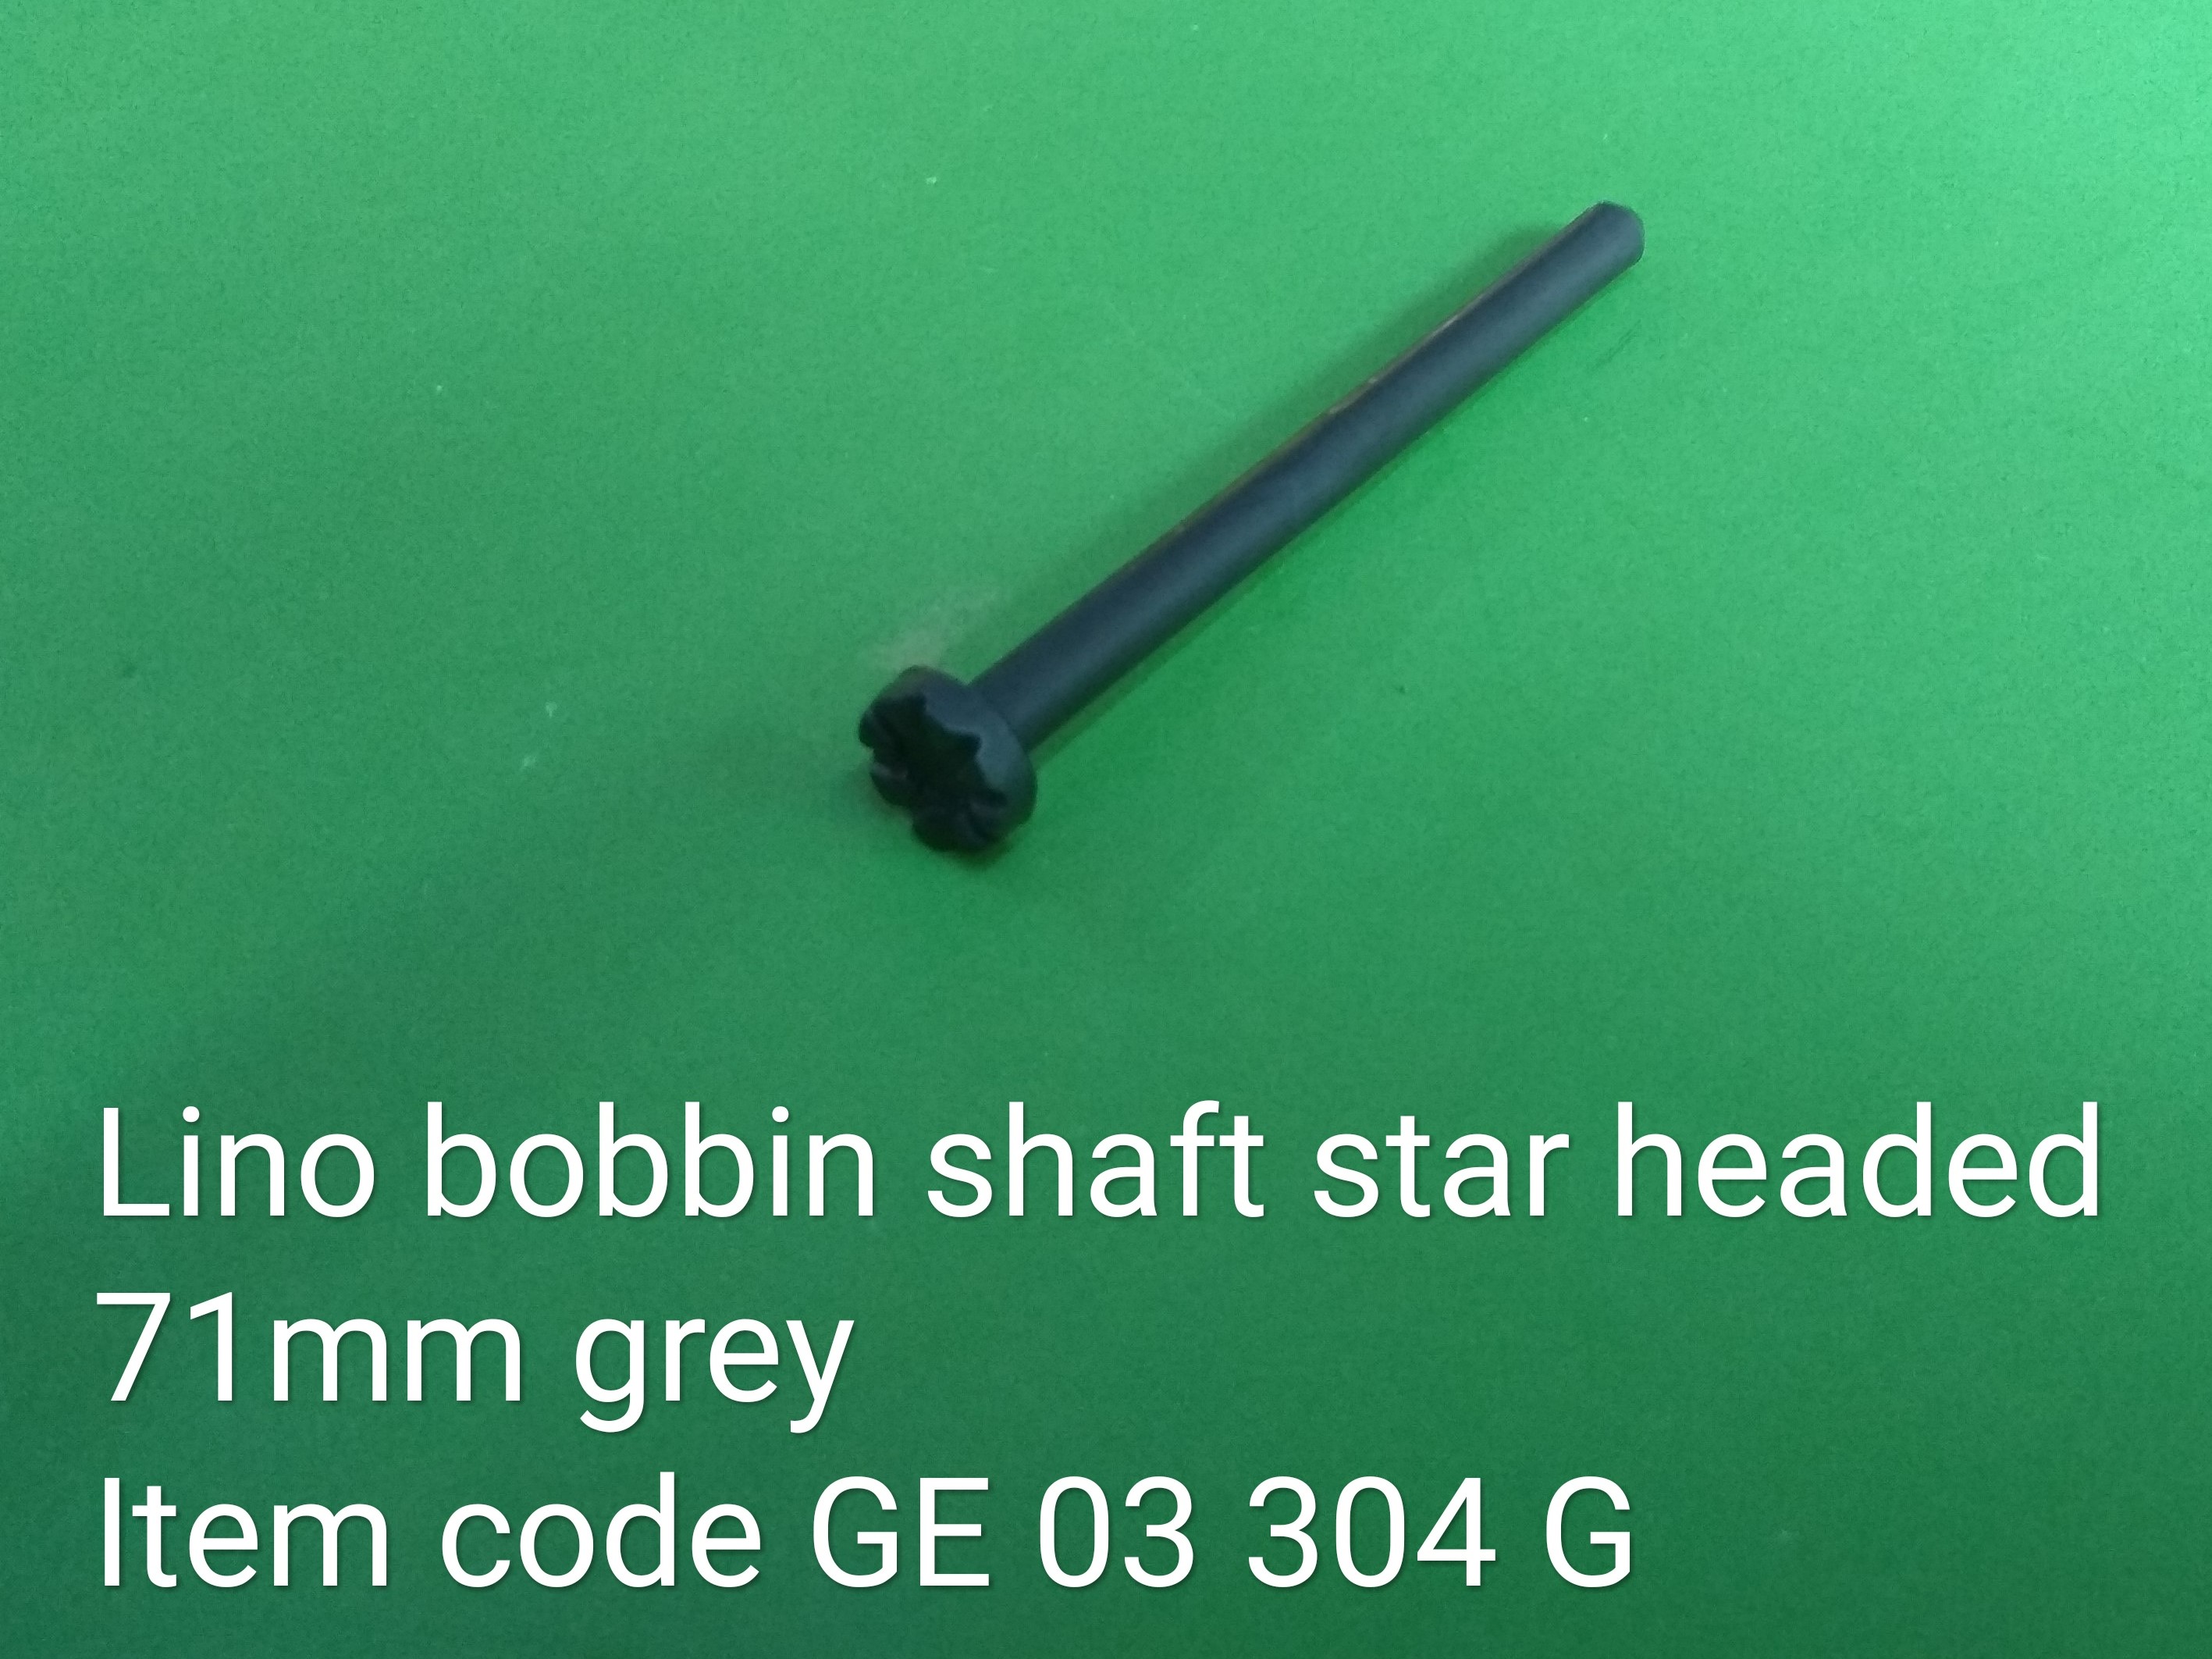 GE_03_304G_Lino_Bobbin_Shaft_Star_Headed_71mm_Gray_54_69.jpg